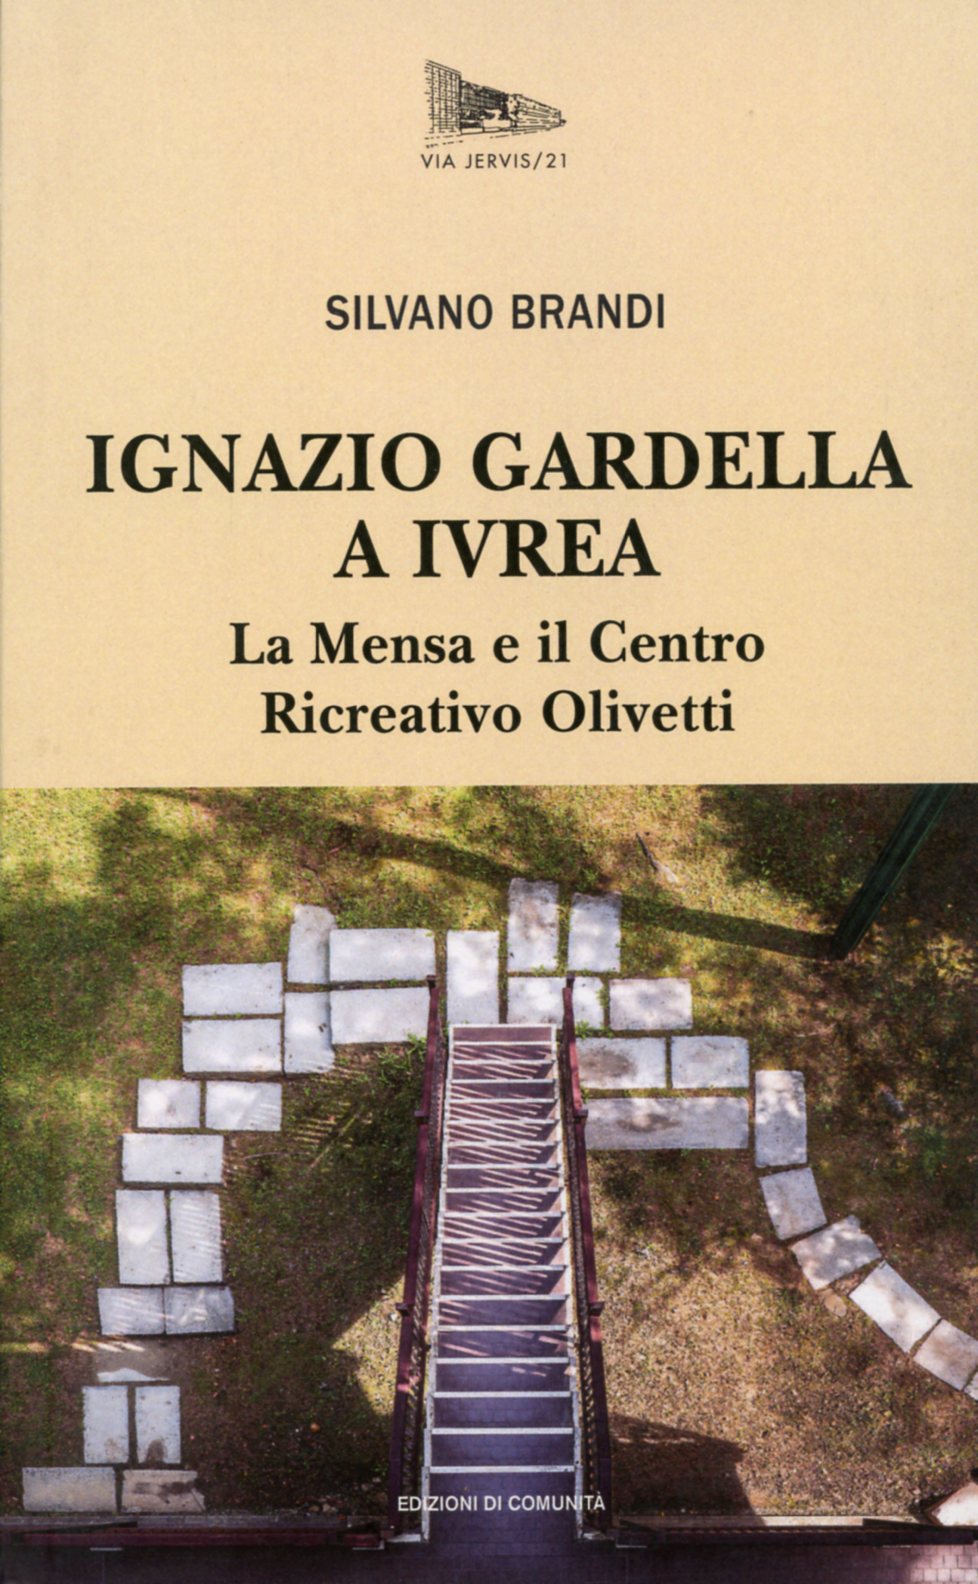 Ignazio Gardella in Ivrea